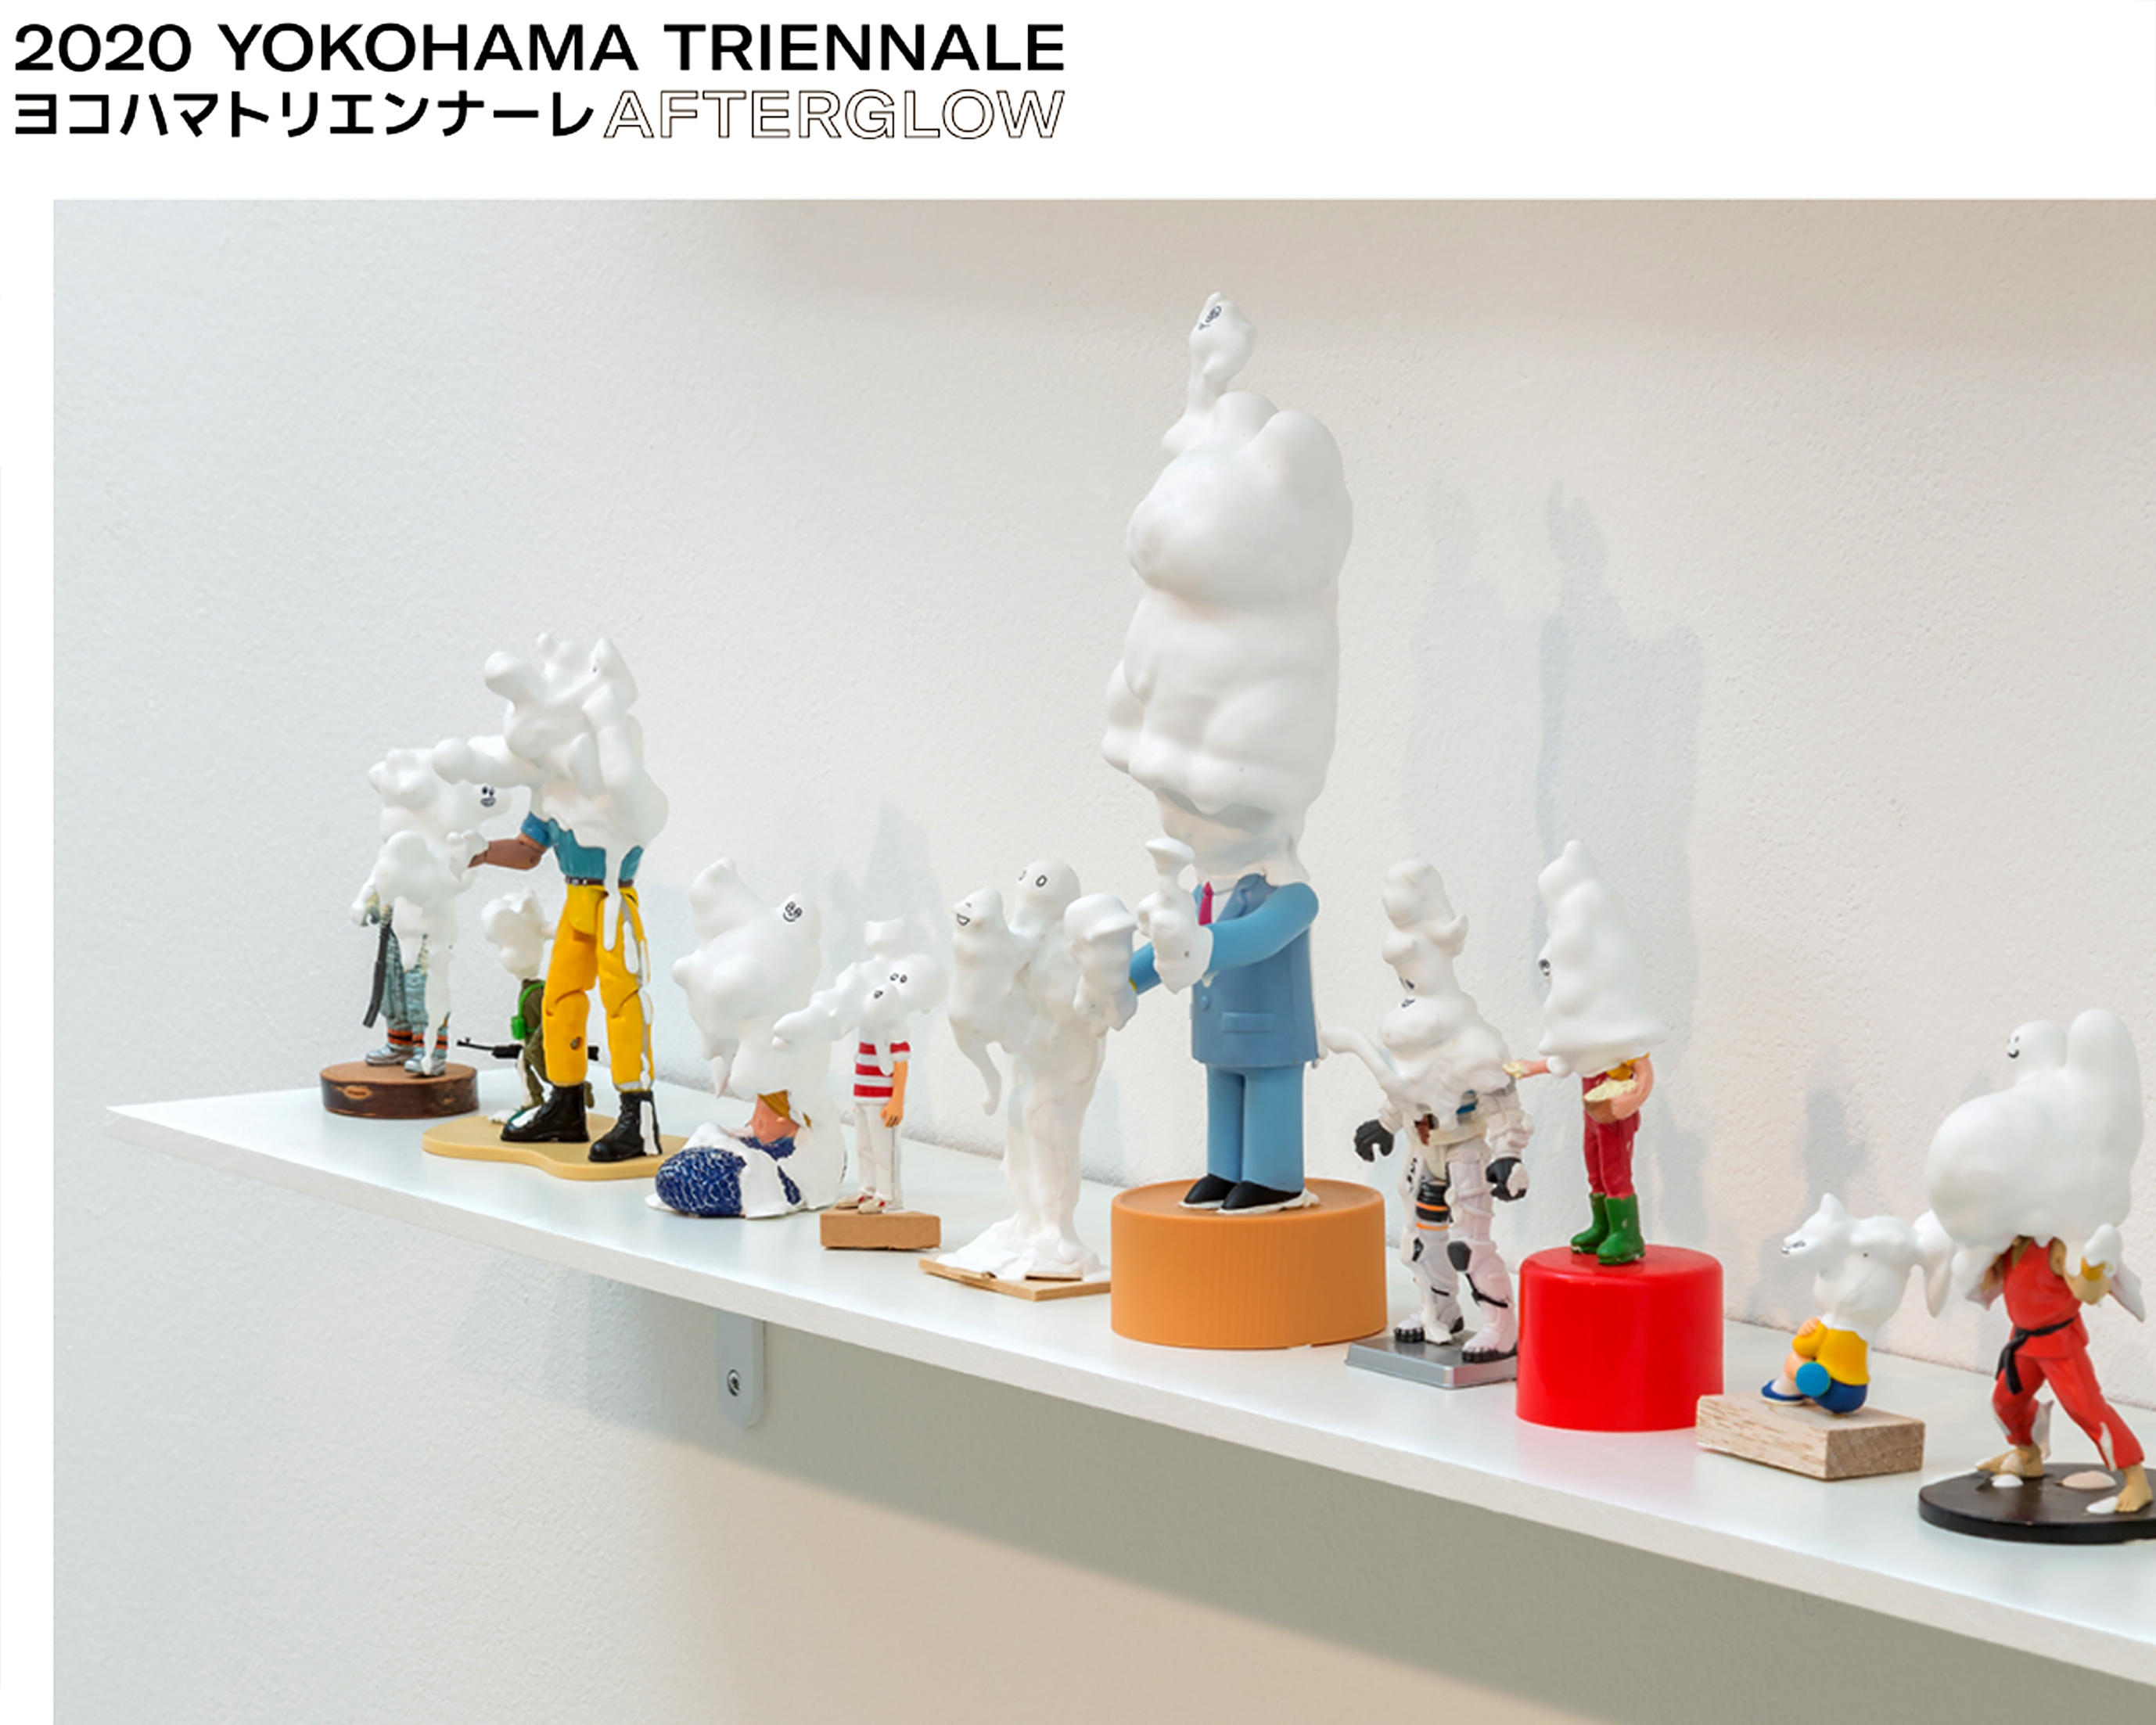 Teppei Kaneuji @ The Yokohama Triennale 2020 in Japan !